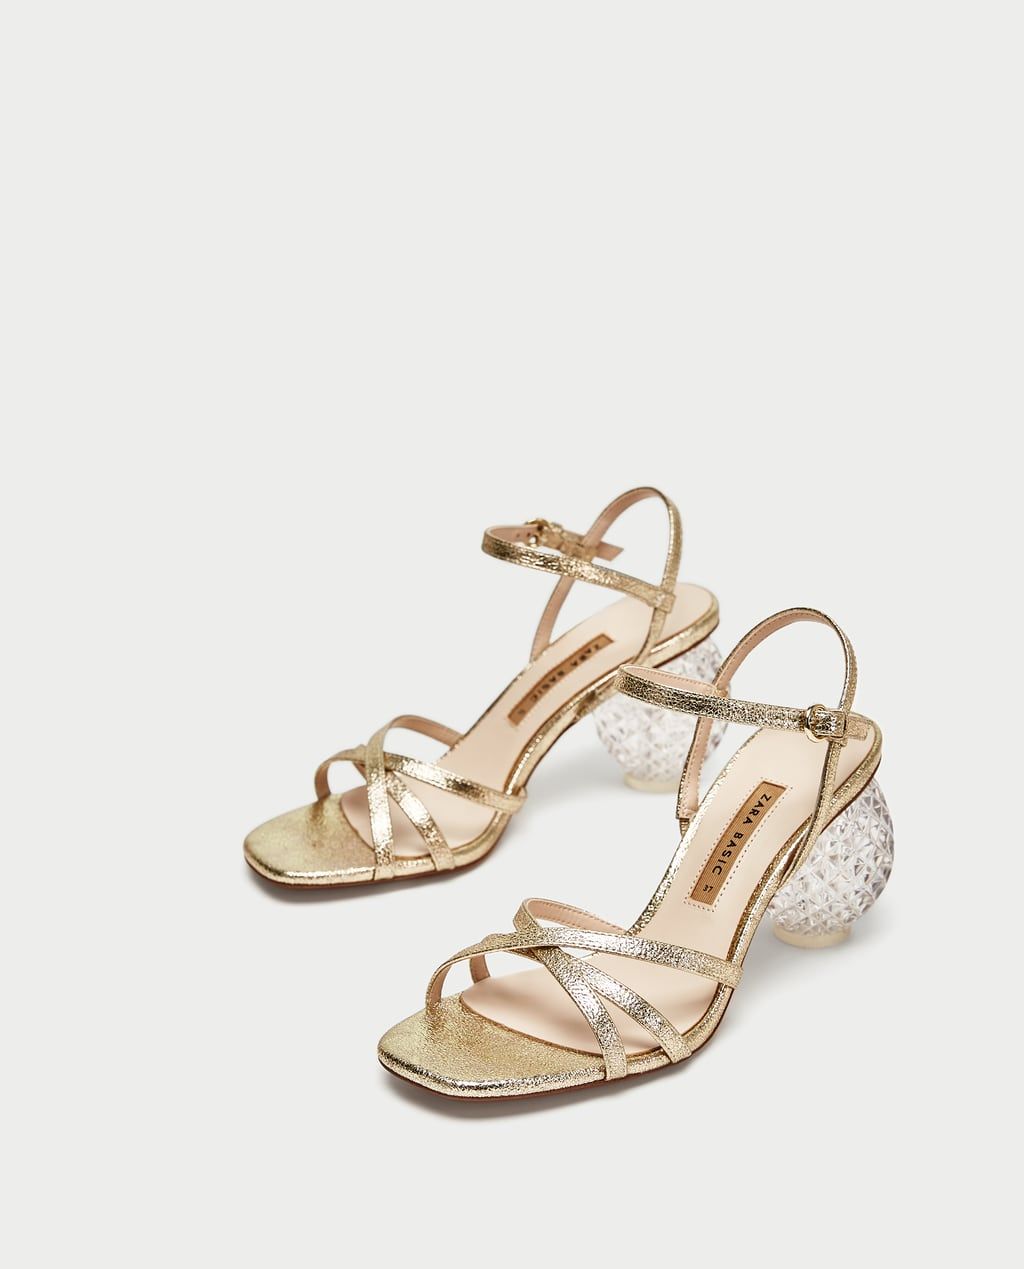 Sandalias doradas tacón, Zara